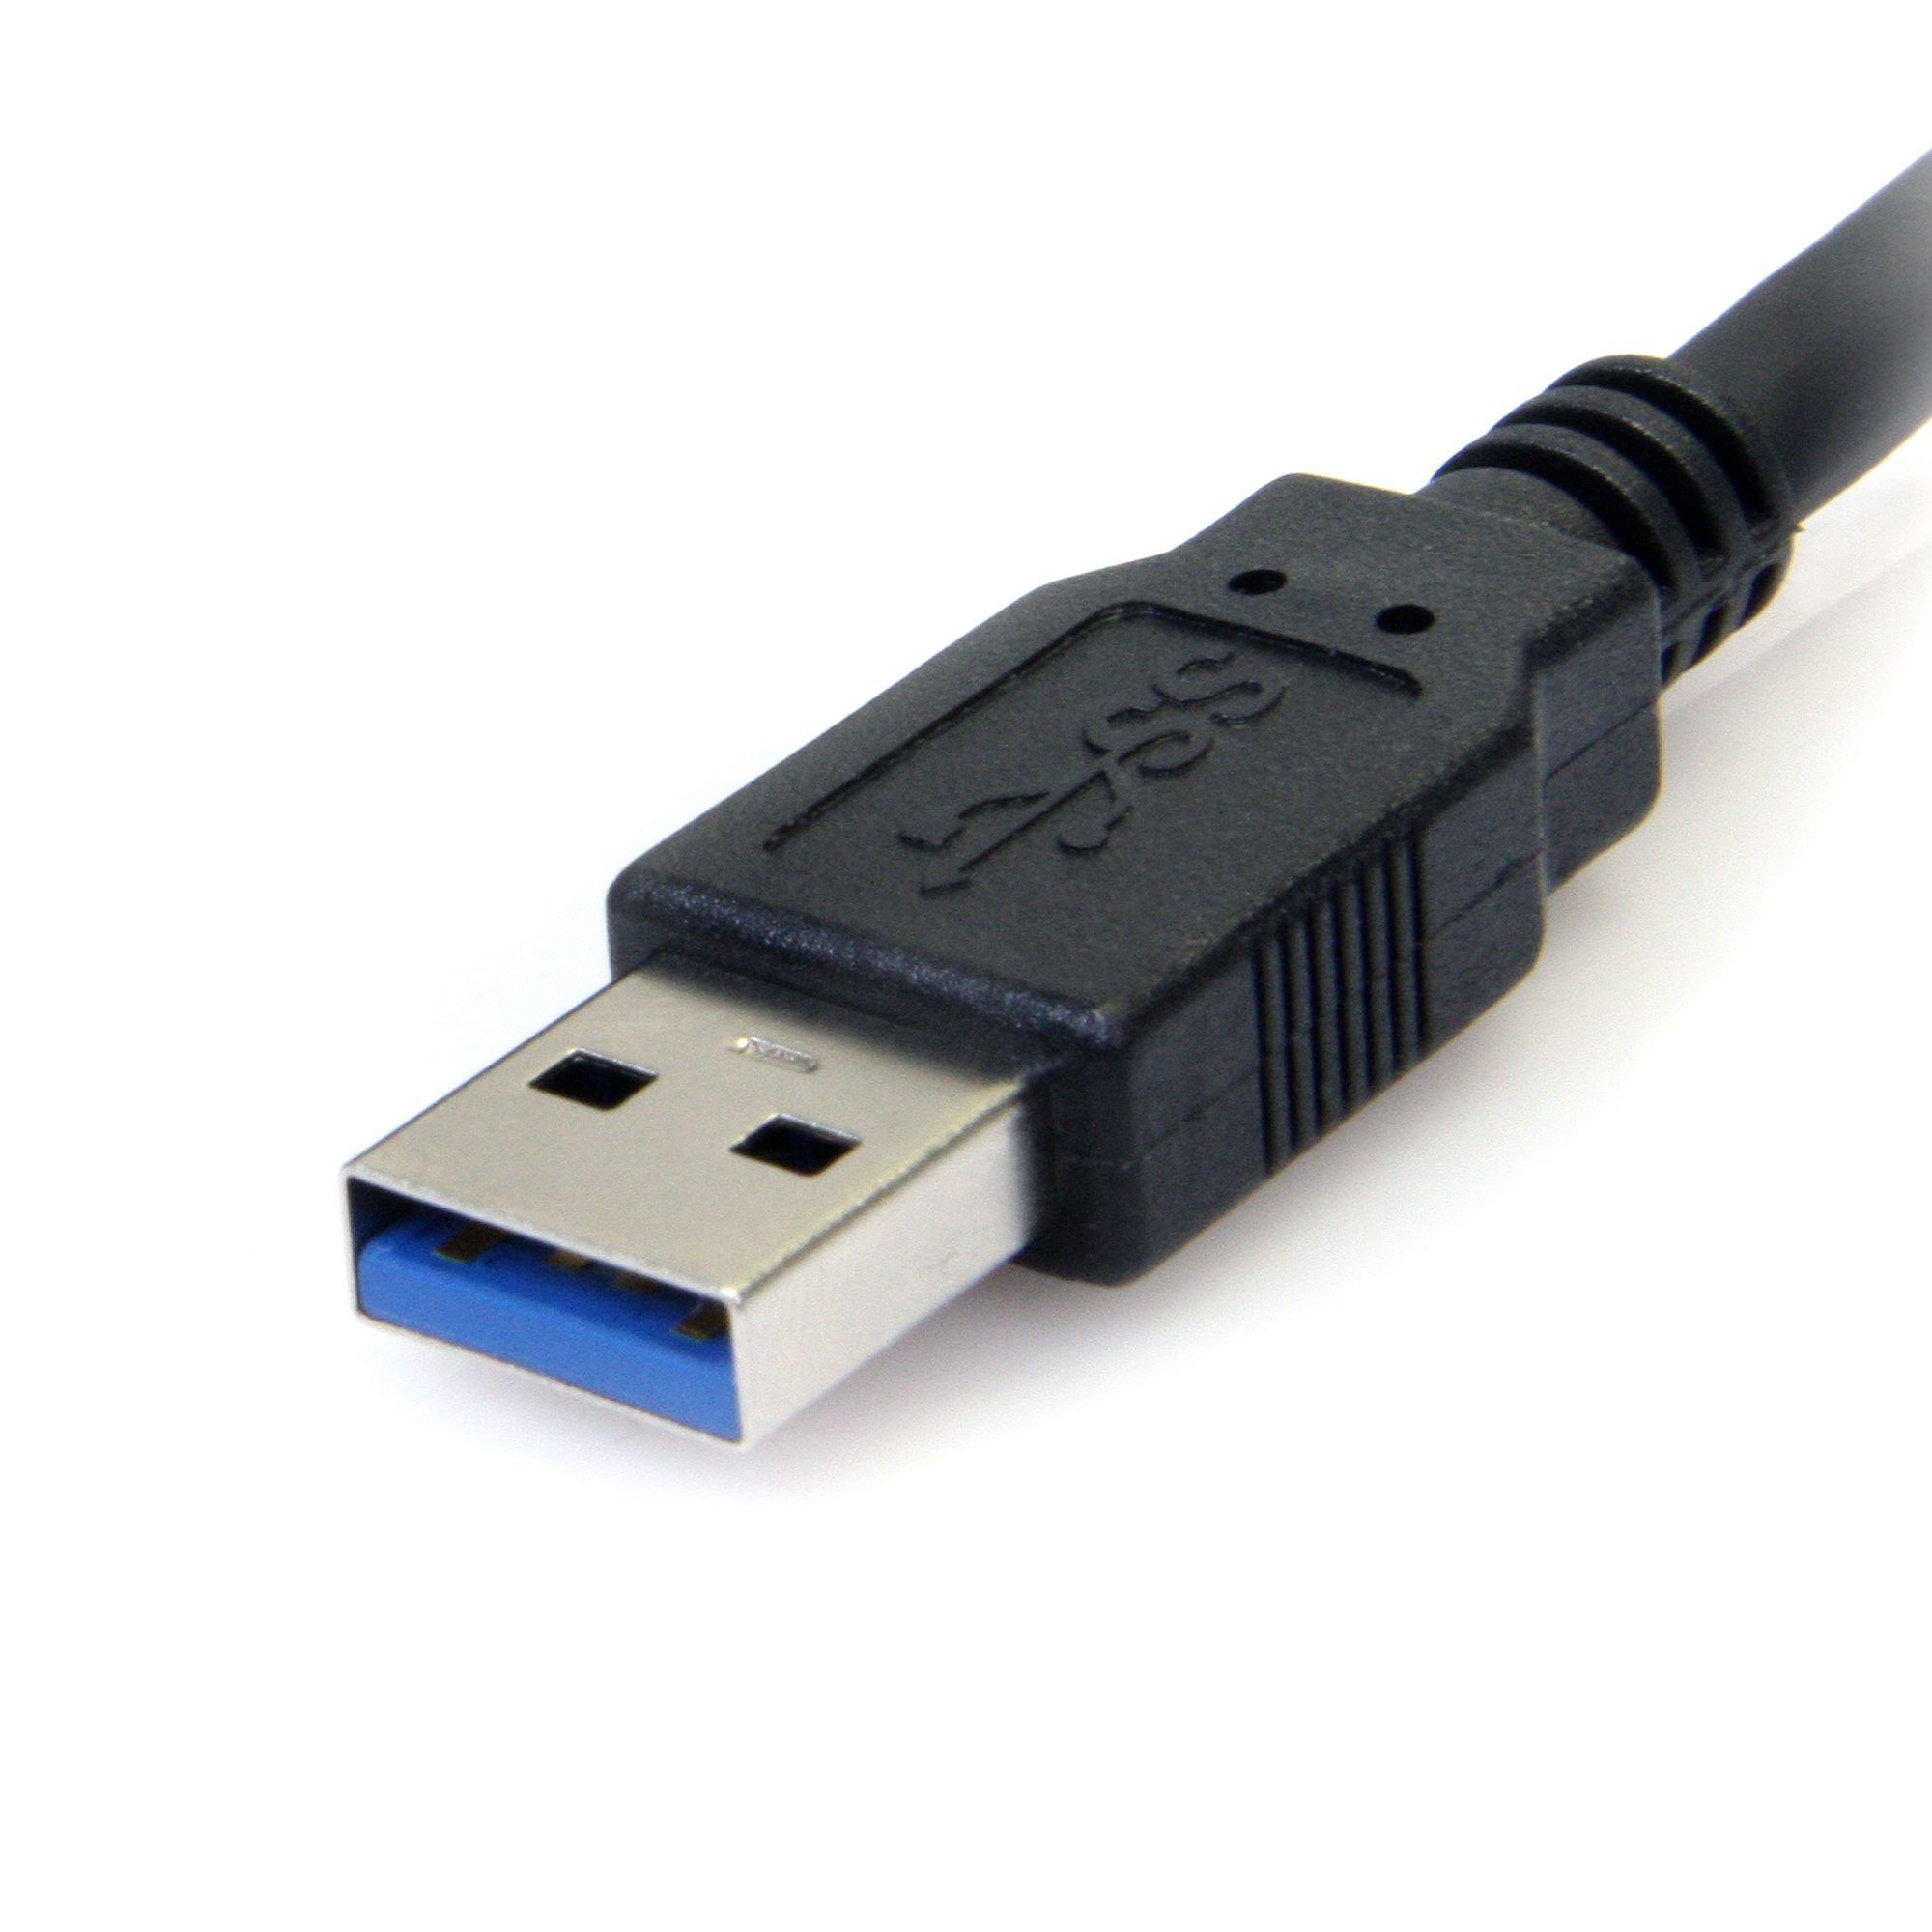 Кабель USB 3.0 SUPERSPEED USB 3.0. USB 3.0 Type b(m) угловой. USB 3.0 Cable Micro-b винт. Кабель USB 3.0 Micro USB 90 градусов. Usb 3.0 папа папа